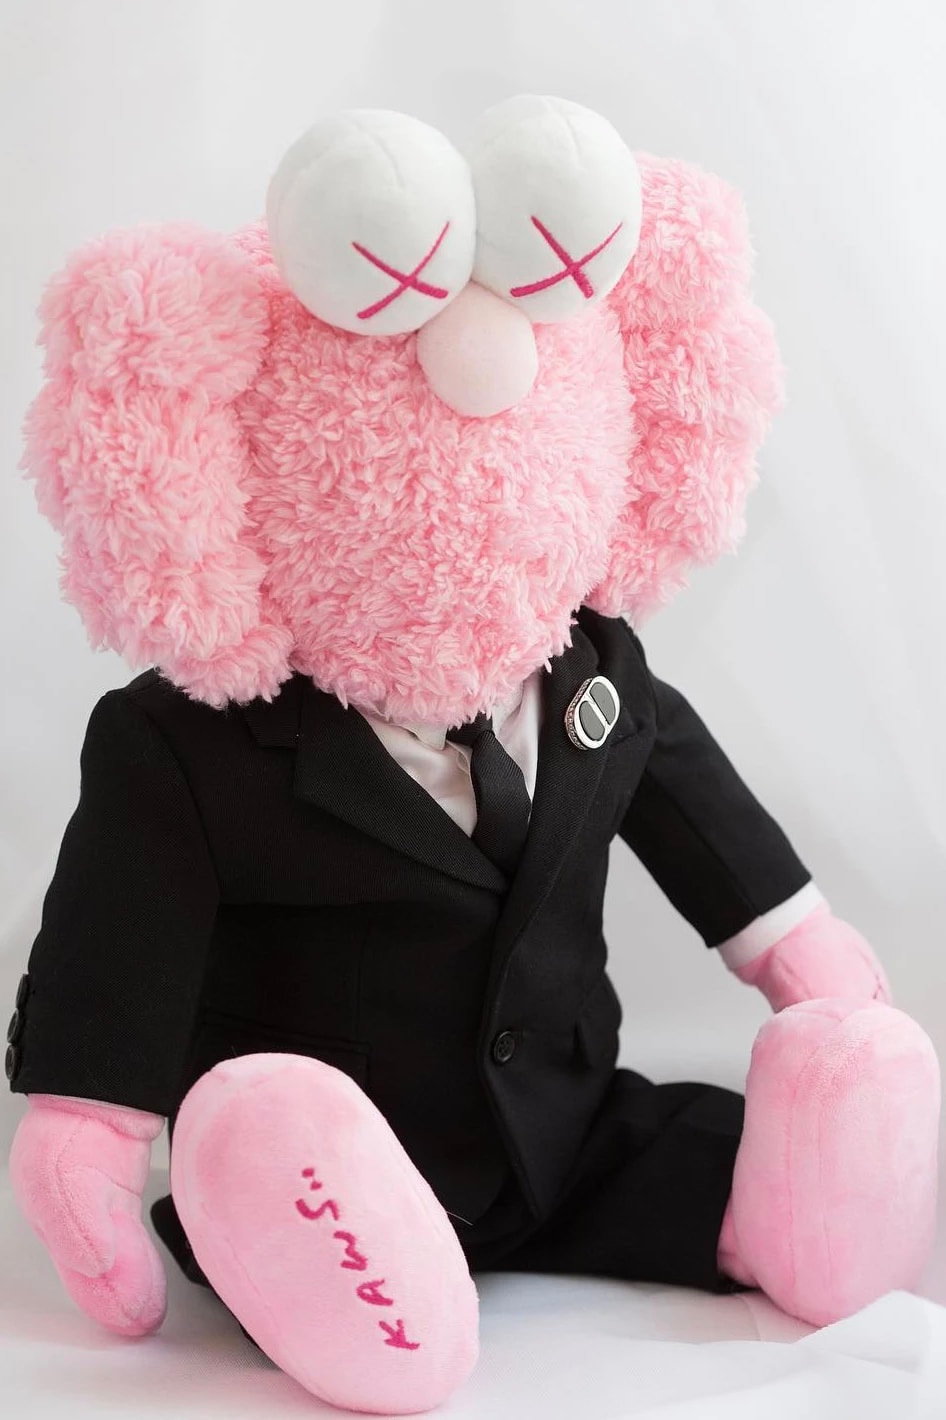 Dior Men KAWS Pink BFF Doll Kim Jones Spring Summer 2019 Homme Suit Art Design Fashion Collaboration